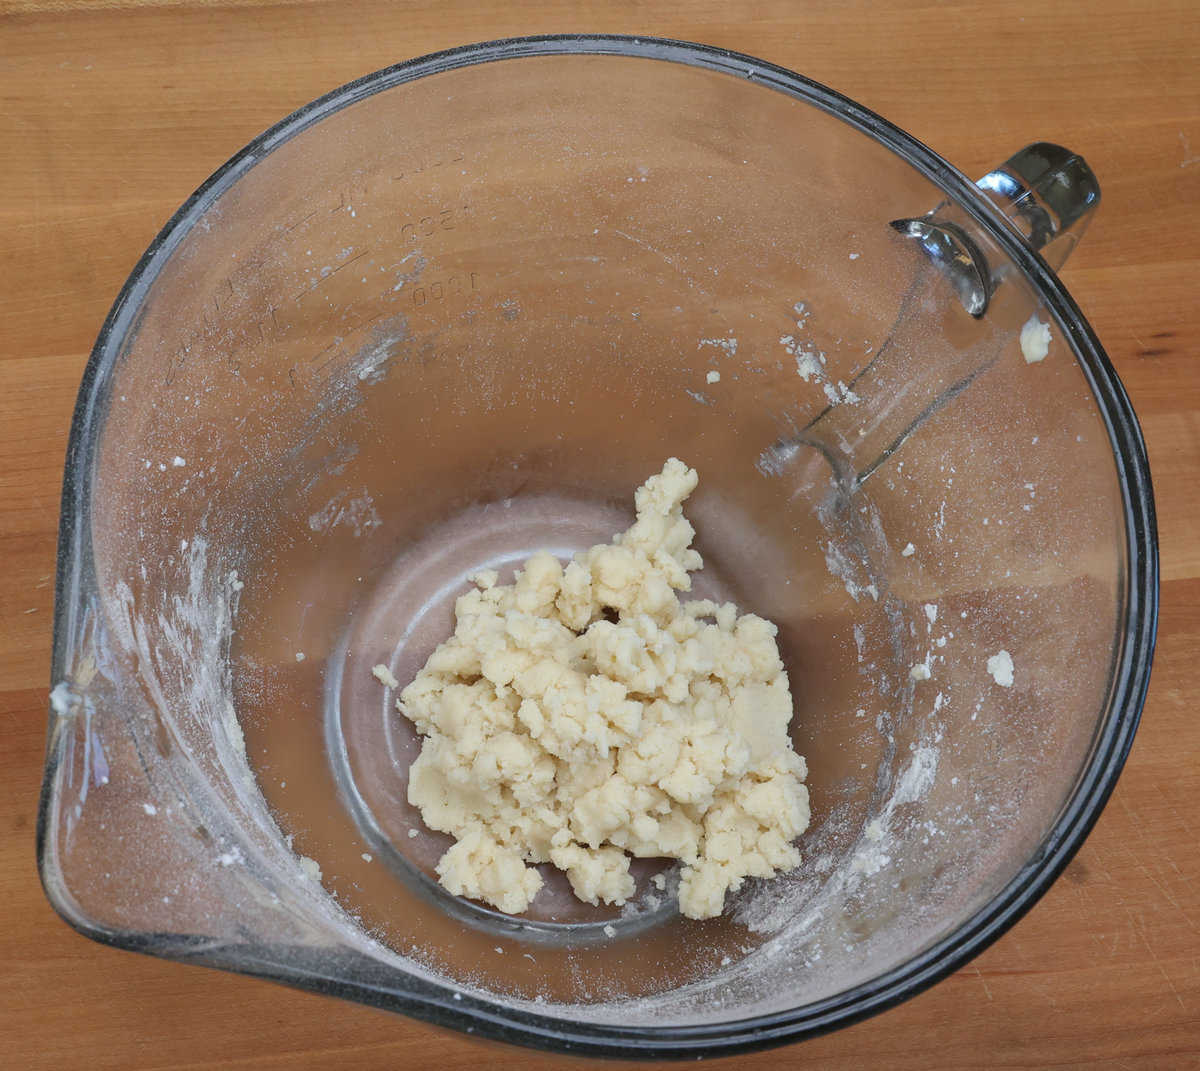 pie crust dough in a mixing bowl.